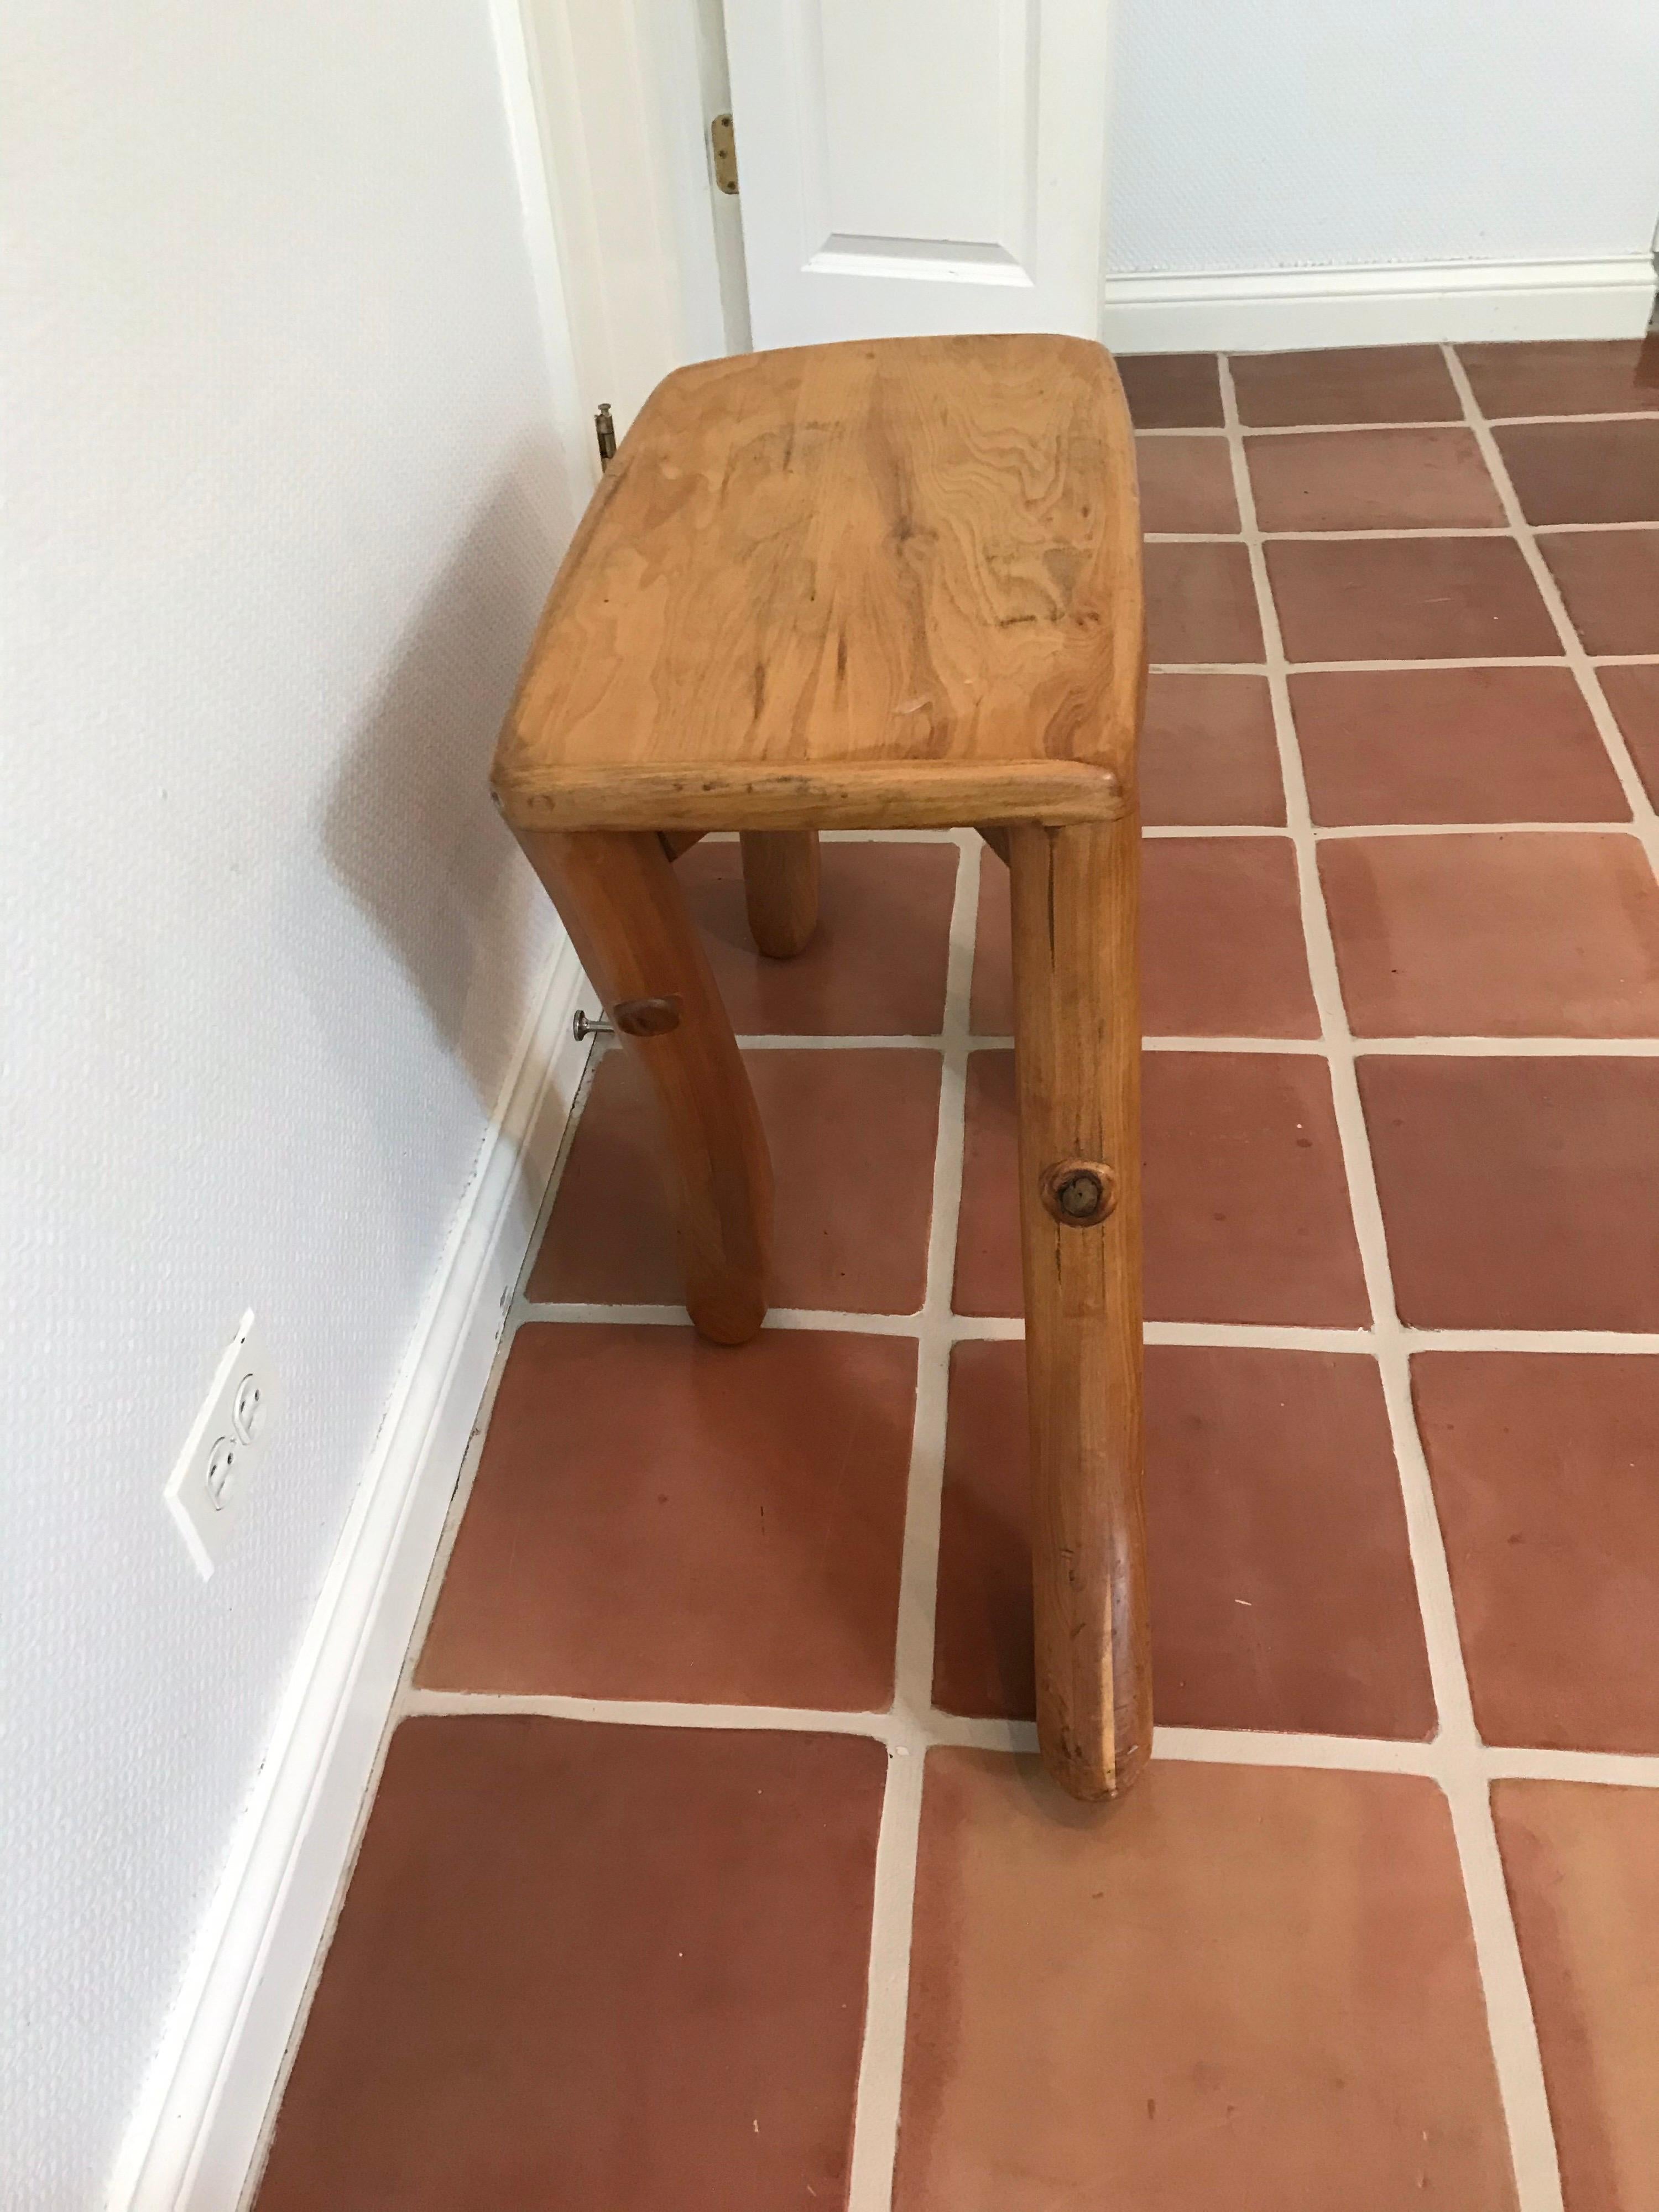 This is a cool handmade hardwood walking stool.